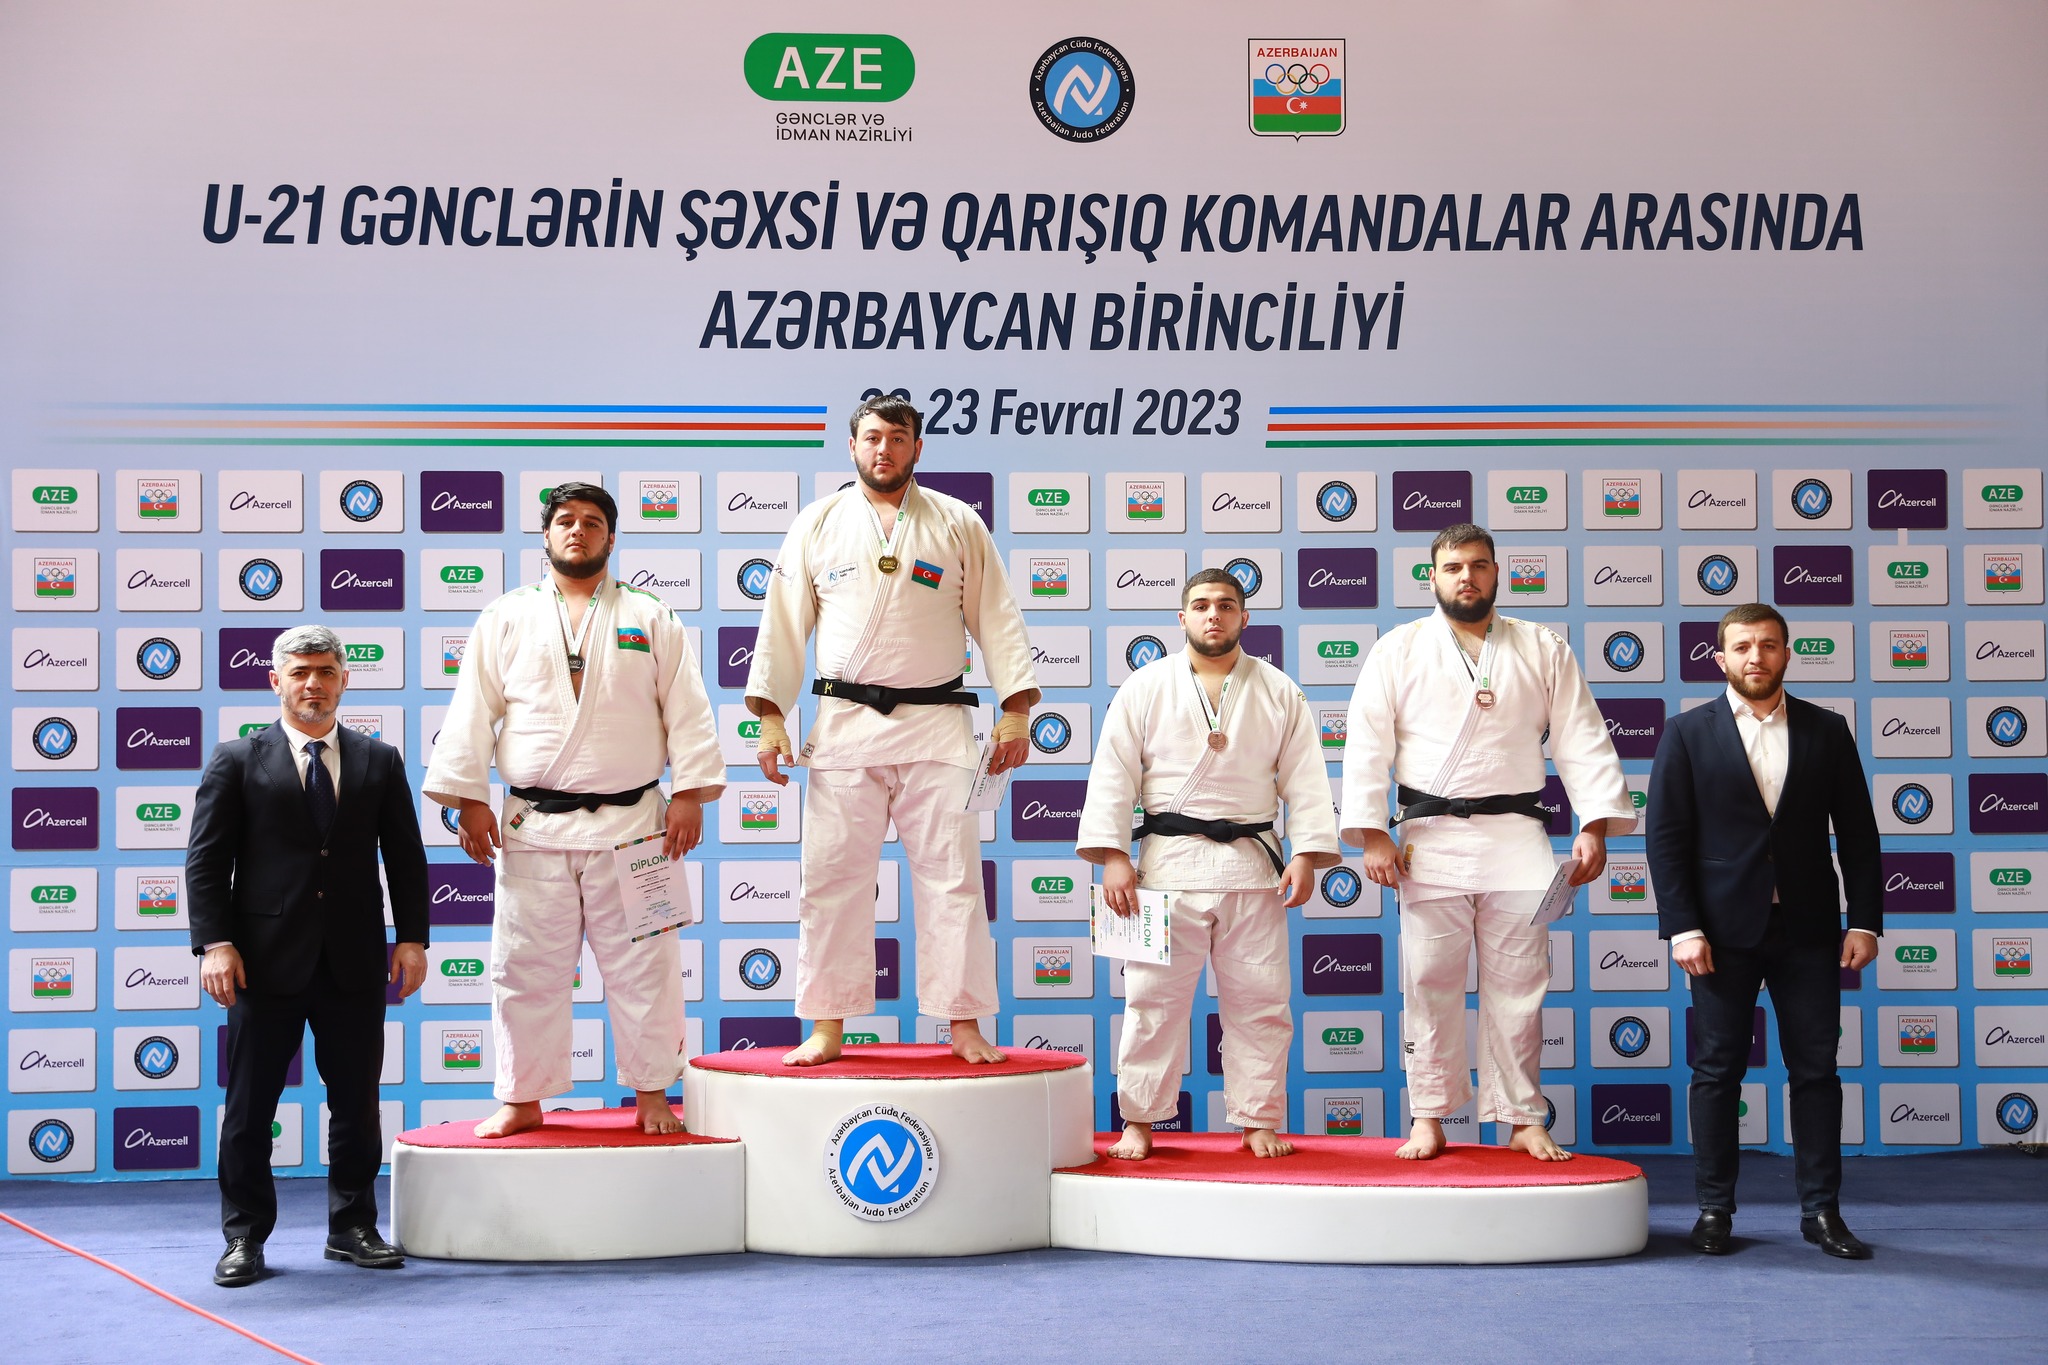 img/posts/judo-club-2012nin-yetirmeleri-azerbaycan-birinciliyini-iki-medalla-basa-vurdular-2023-02-23-202508/1.jpg